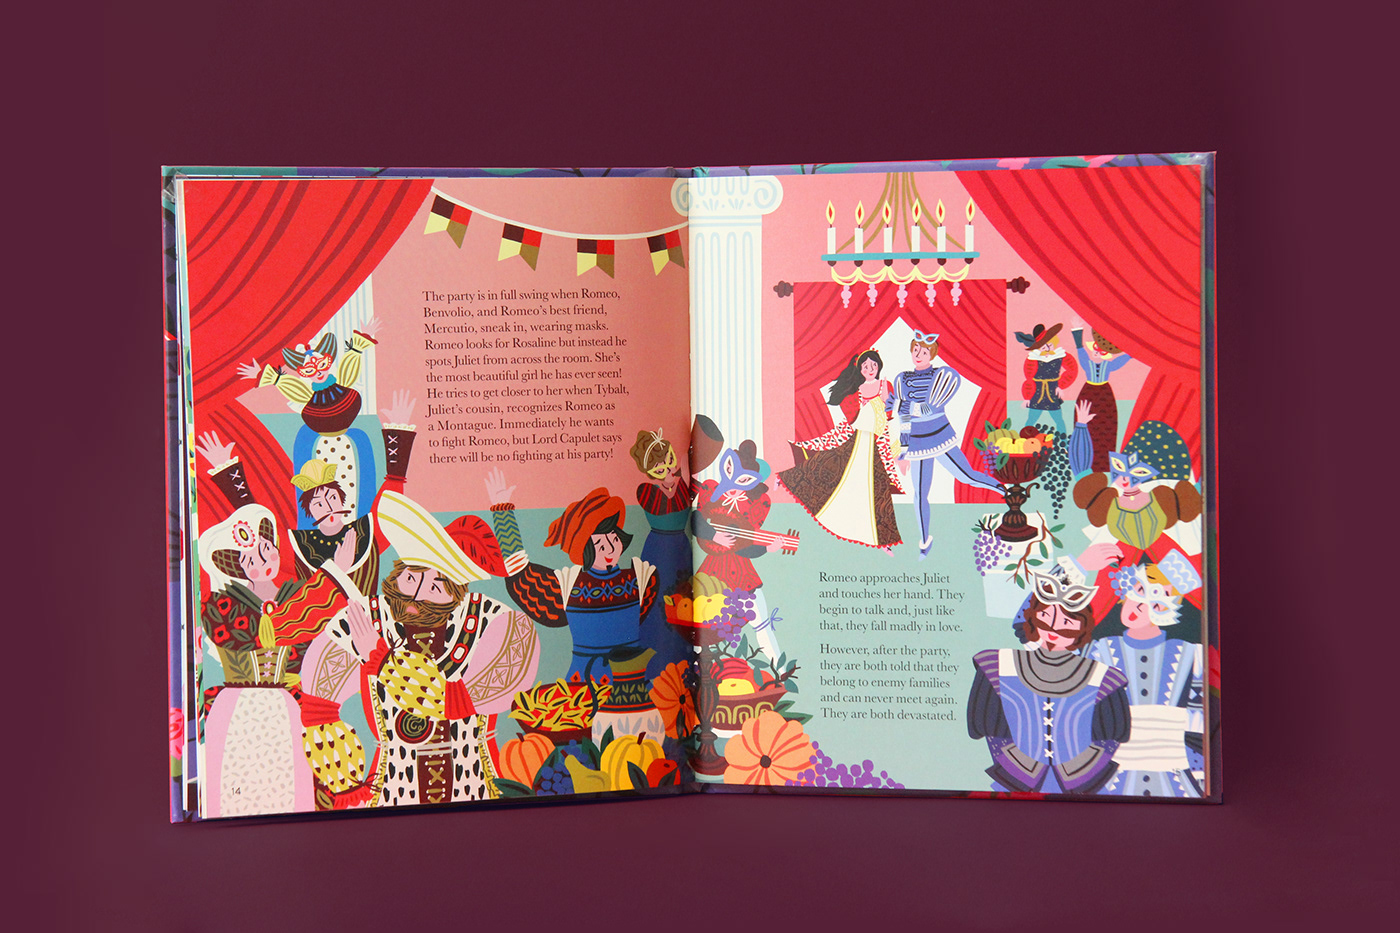 Picture book picturebook illustrated books book books children's book book art shakespeare Marijke Buurlage illustration books